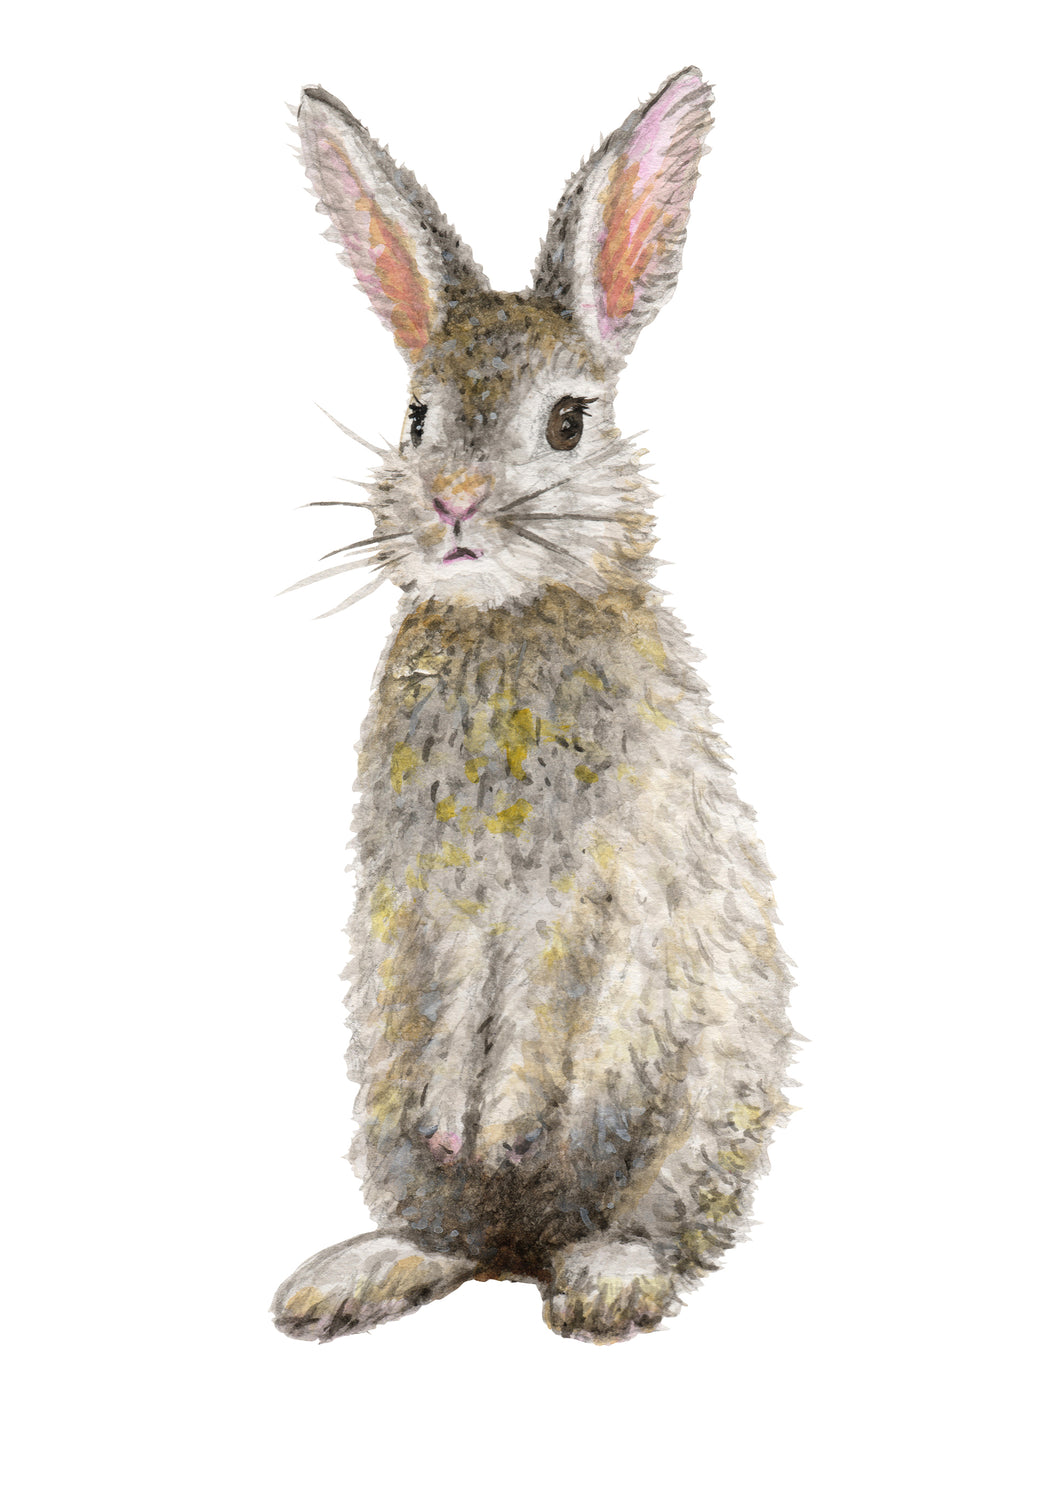 Wallsticker rabbit